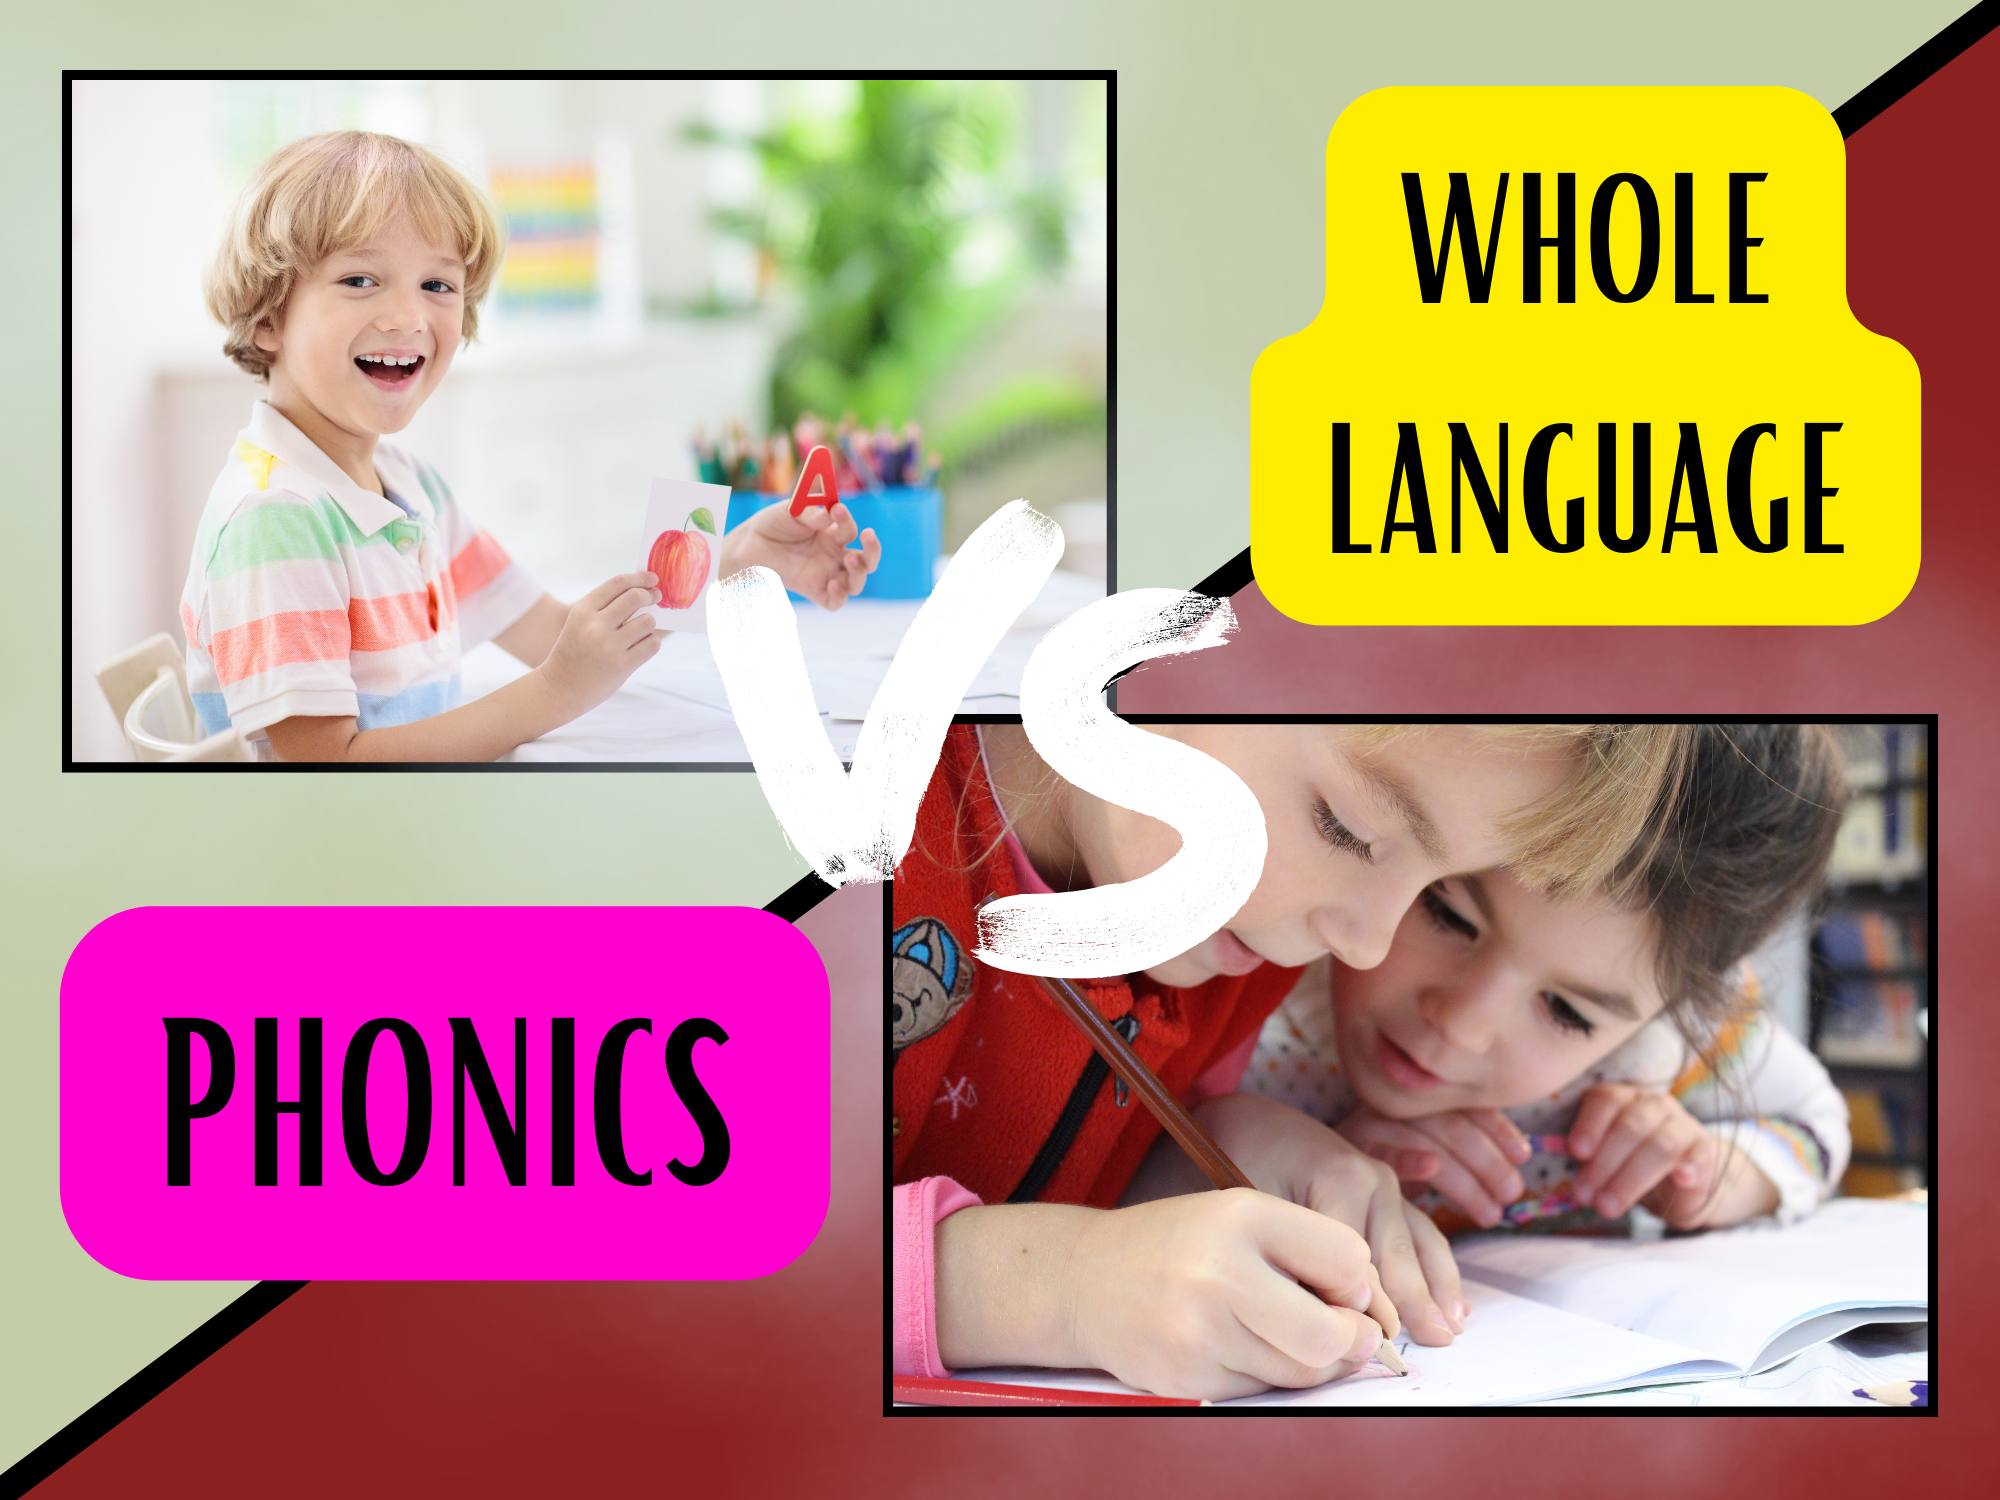 Phonics vs. Whole language